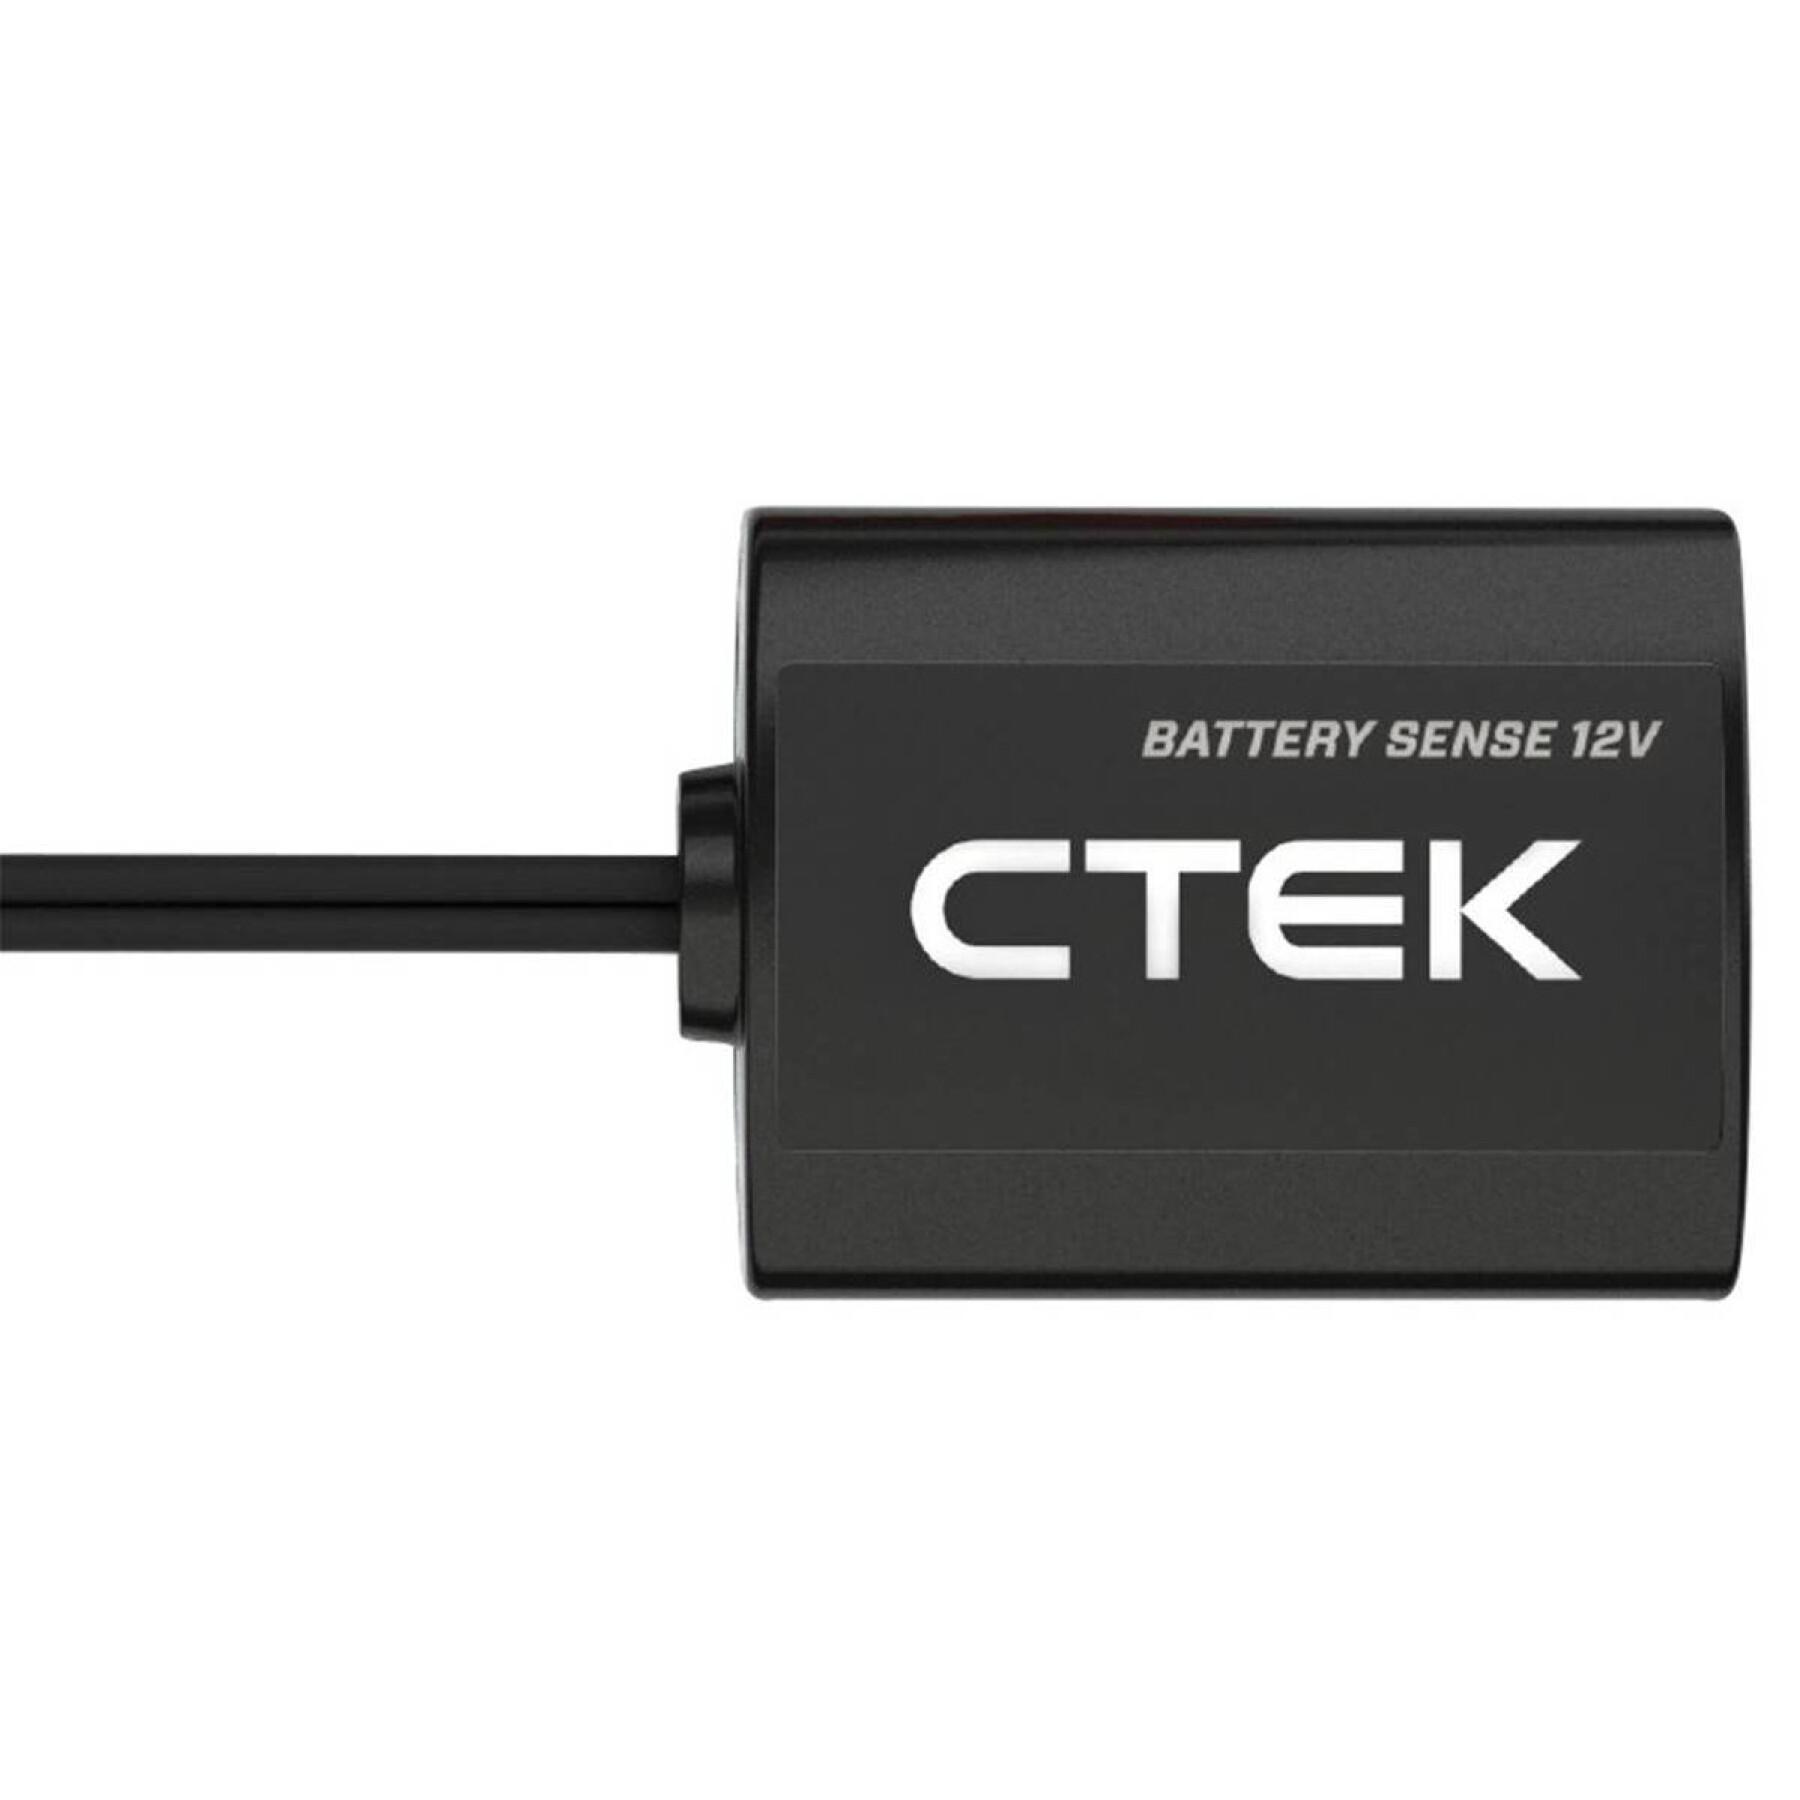 Battery charger Ctek Sense